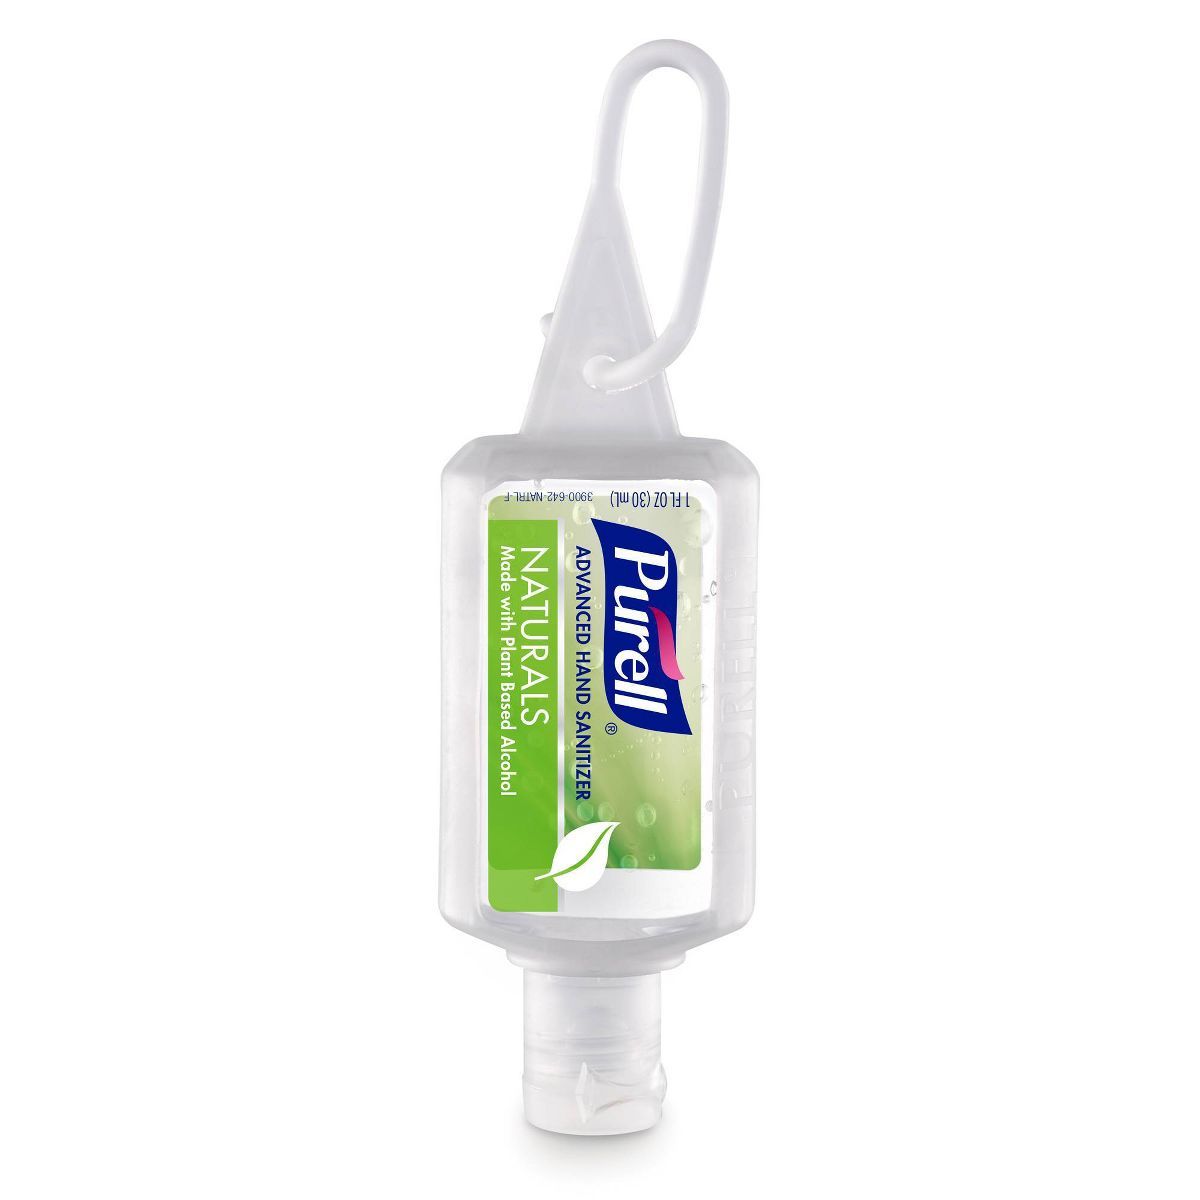 Purell Jelly Wrap Gel Hand Sanitizer - 1 fl oz - Trial Size | Target